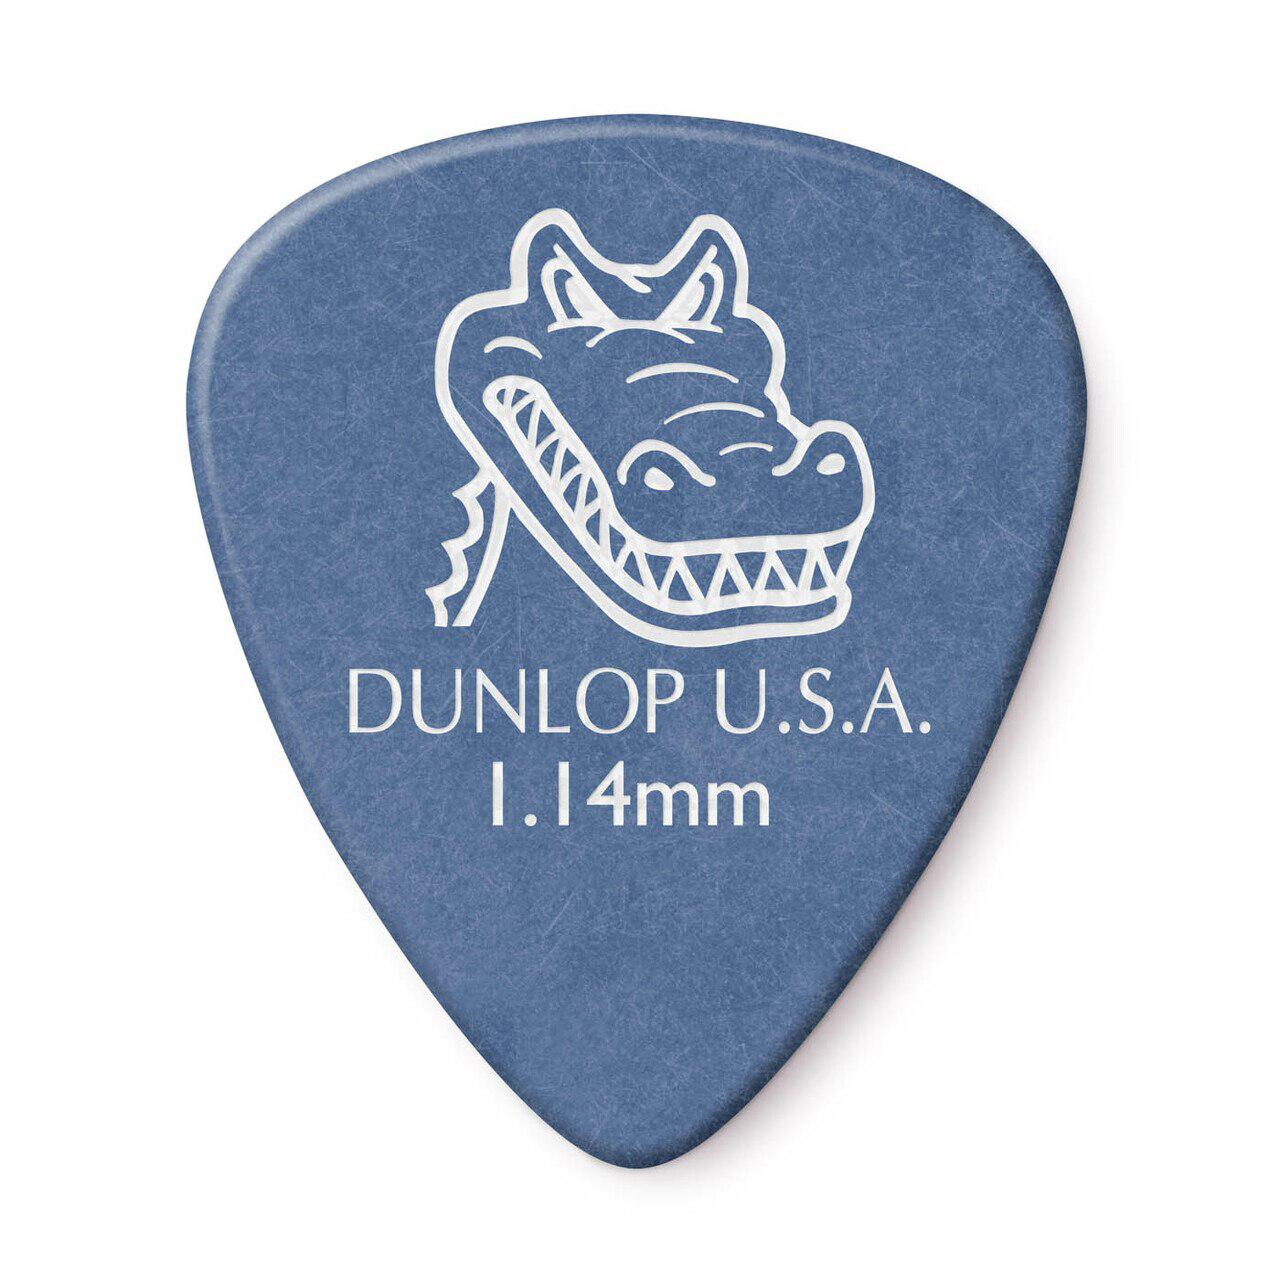 Dunlop - Plumilla Gator Grip, 1 Pieza Color: Azúl Medida: 1.14 Mod.417B1.14_29